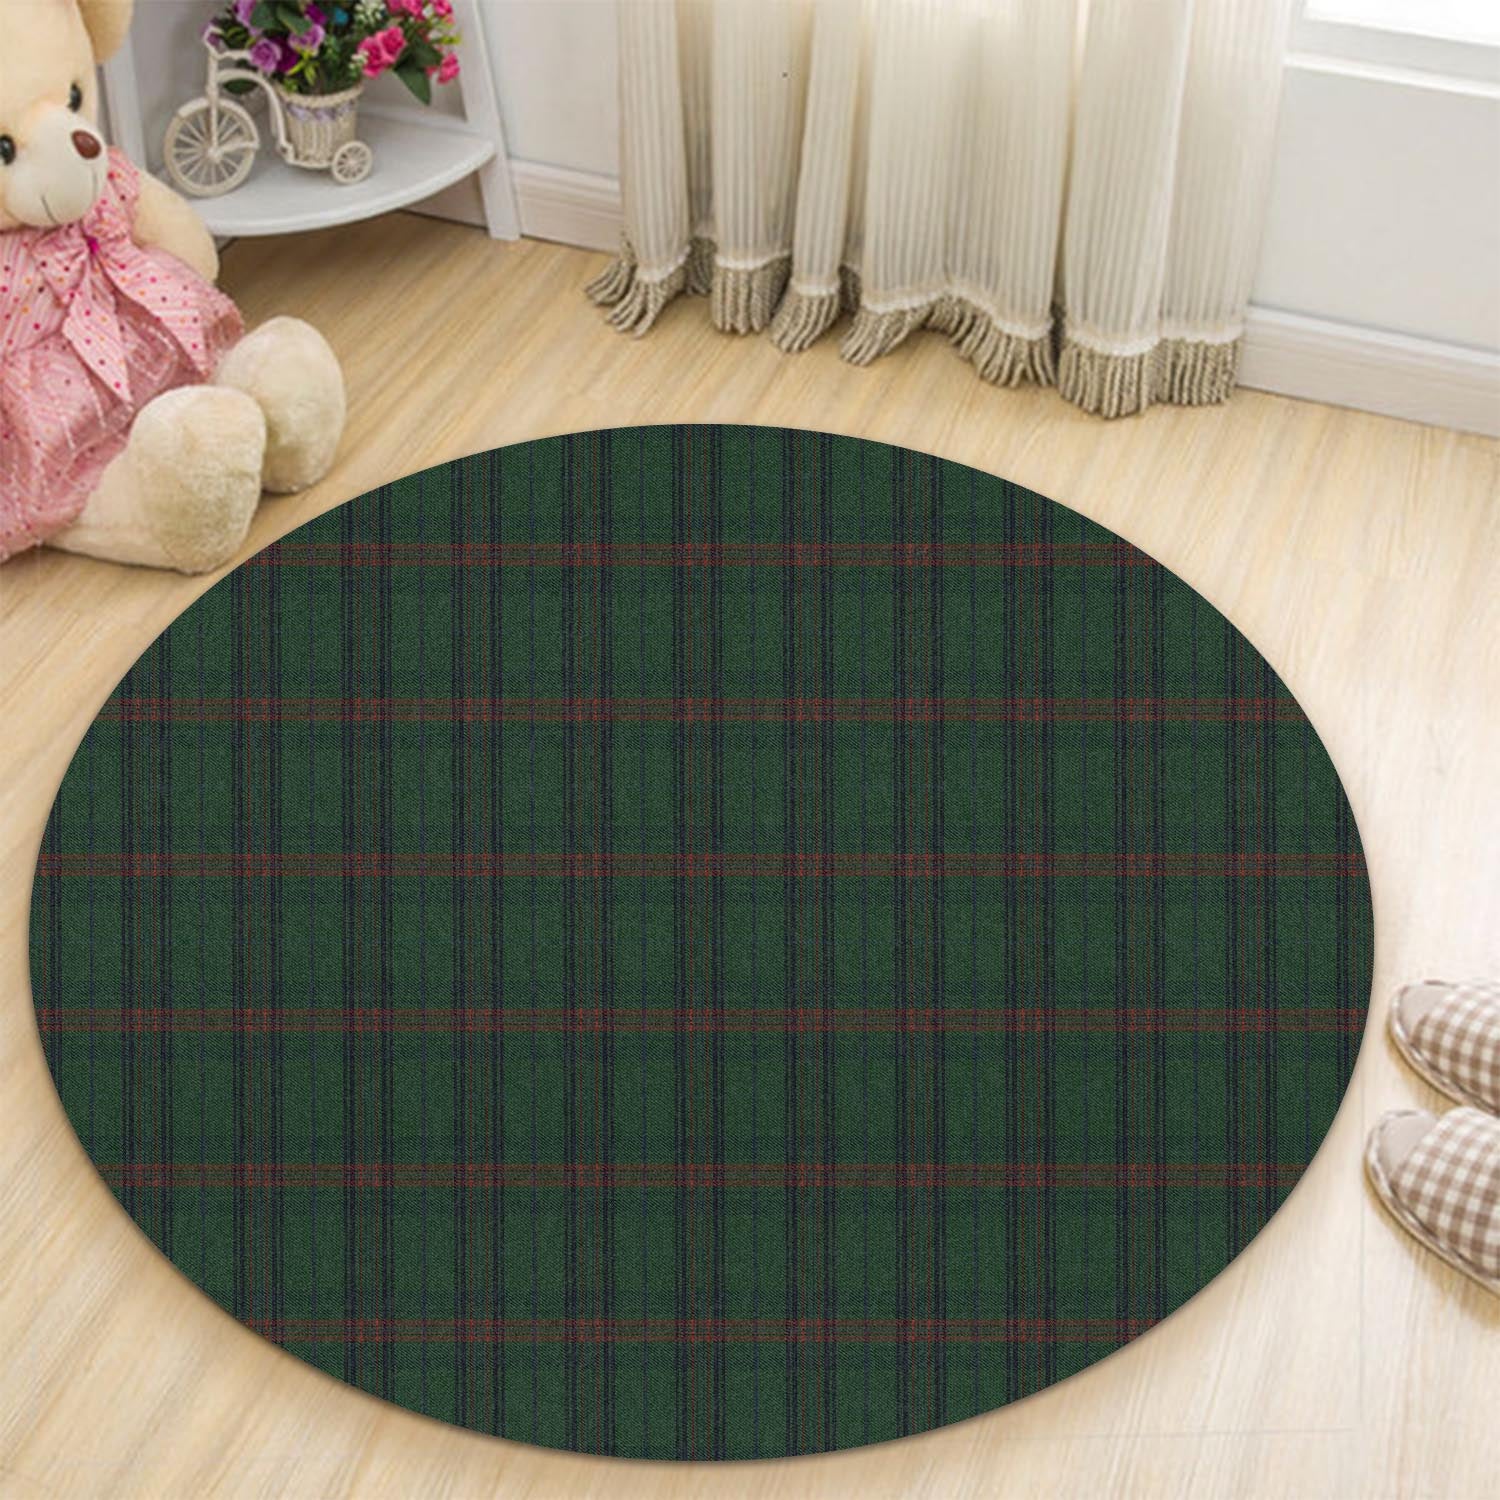 owen-of-wales-tartan-round-rug